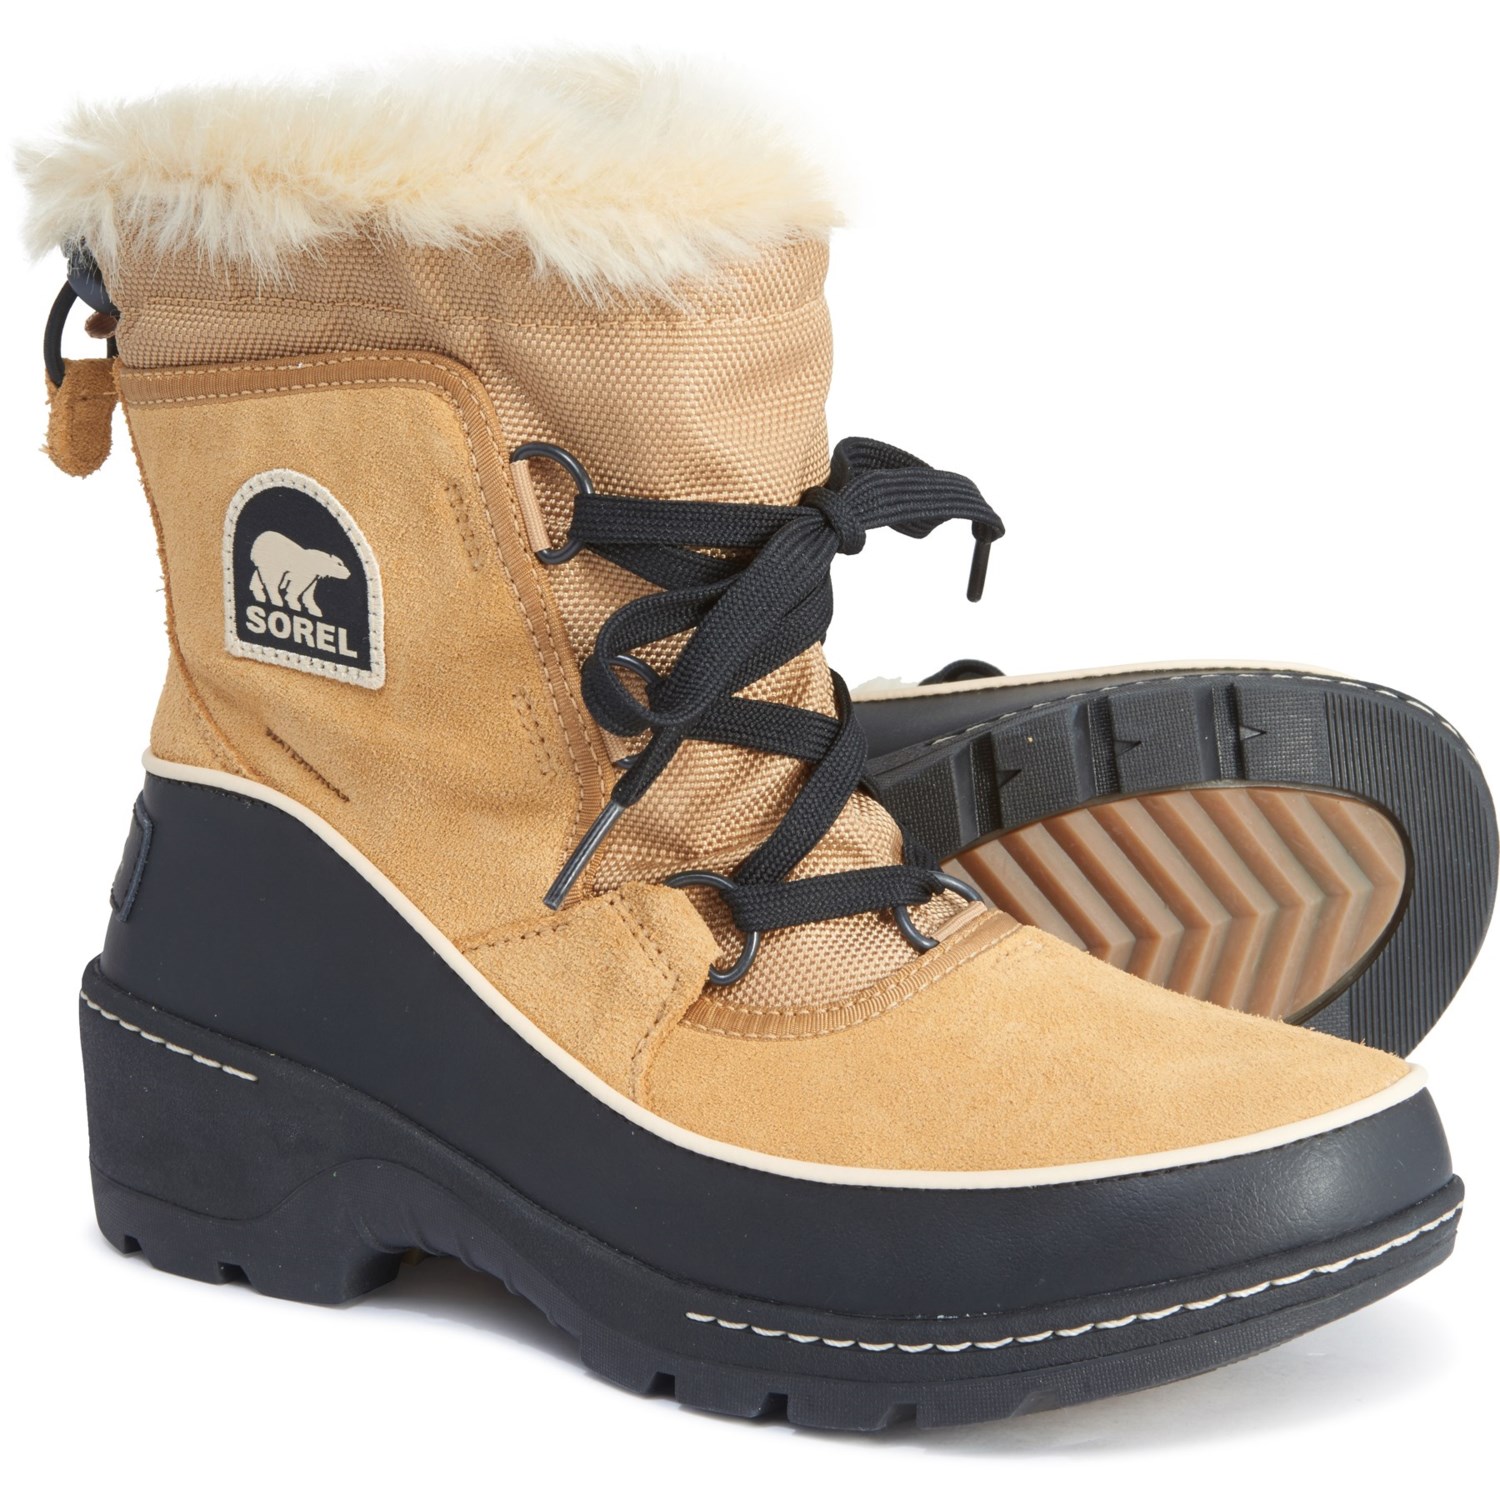 Sorel Tivoli III Snow Boots (For Women)